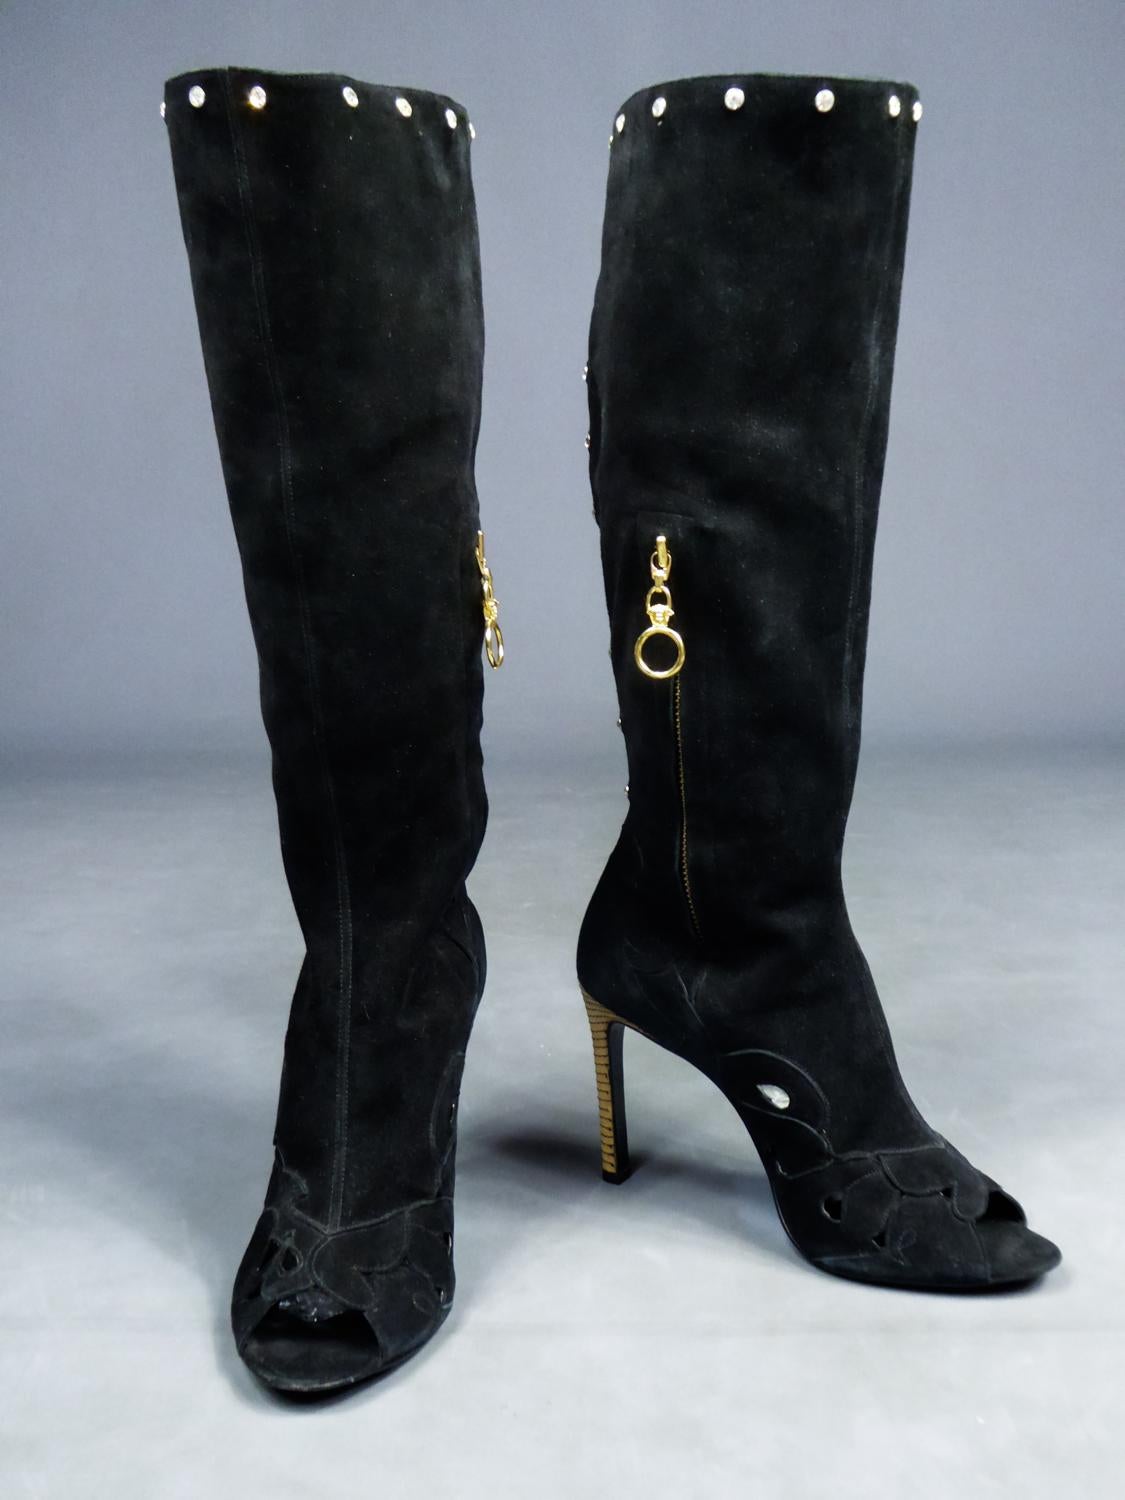 Gianni Versace Boots in Suede and Swarovski Rhinestone Circa 2000 For Sale 4